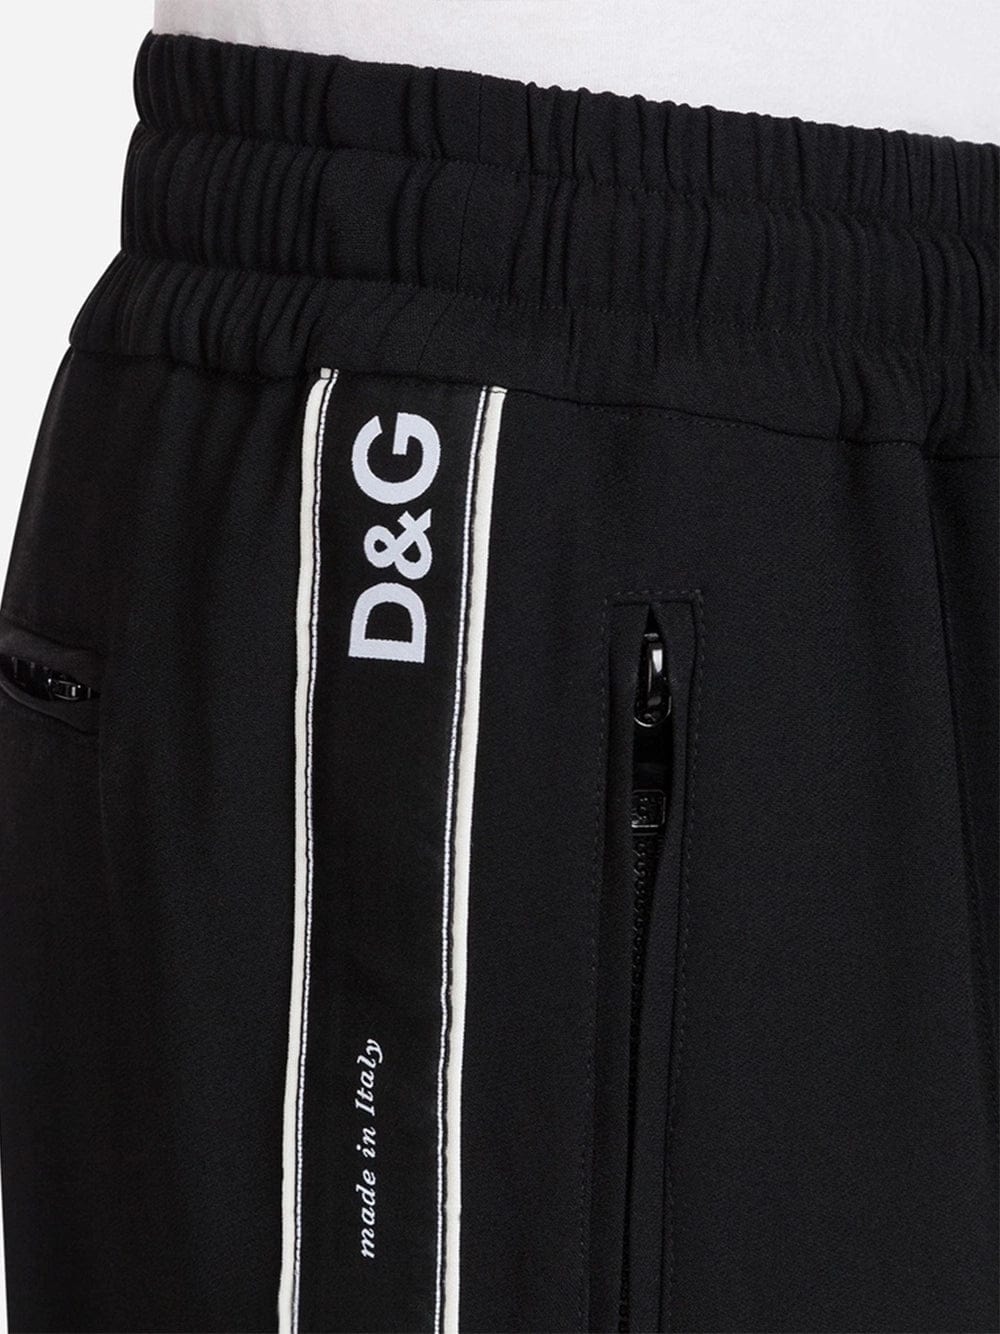 Dolce & Gabbana Branded Bands Cady Jogging Pants